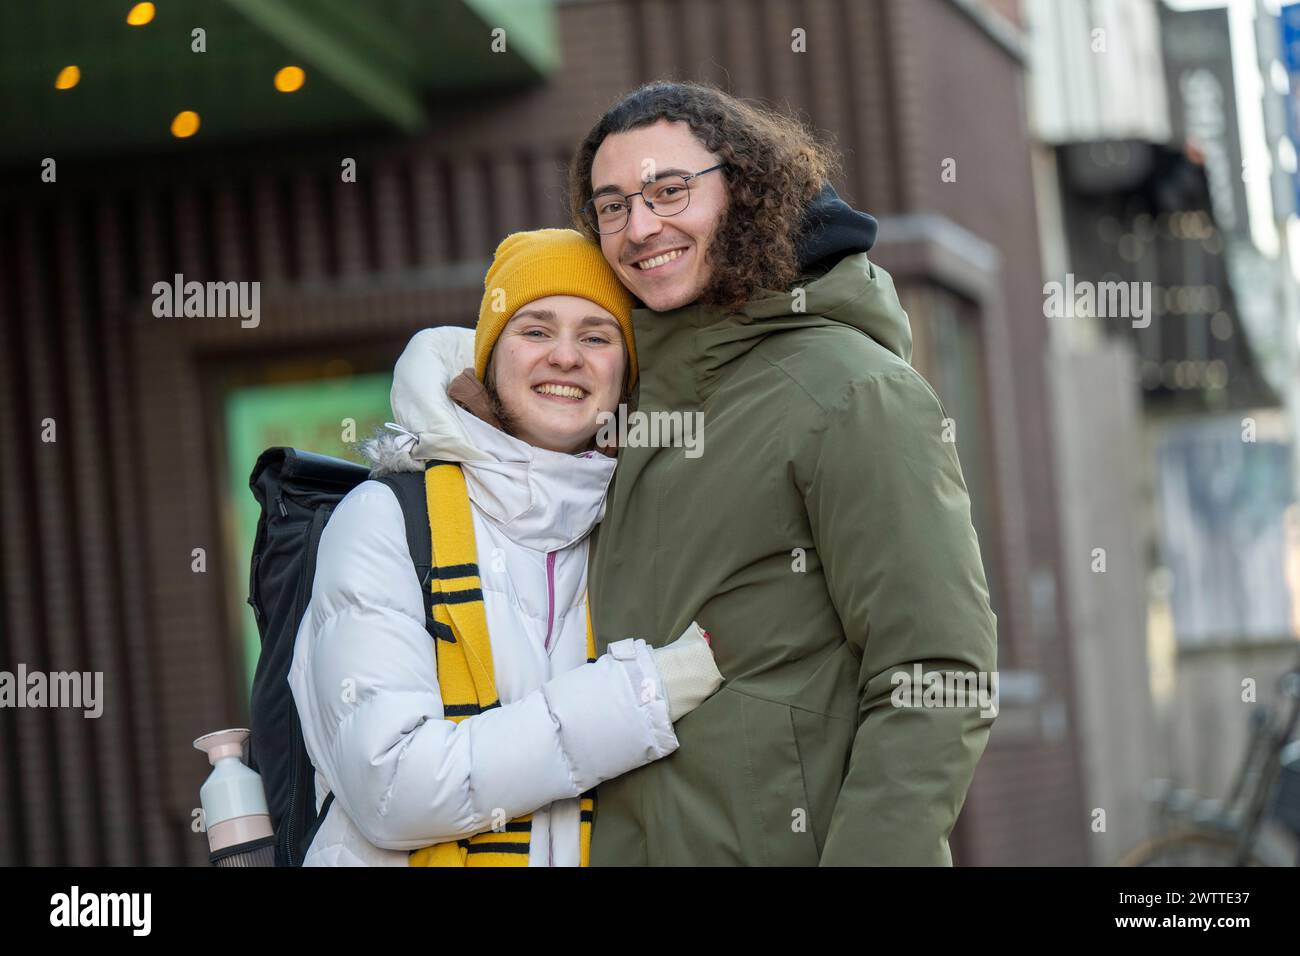 Two friends sharing a joyful embrace on a city street. Stock Photo